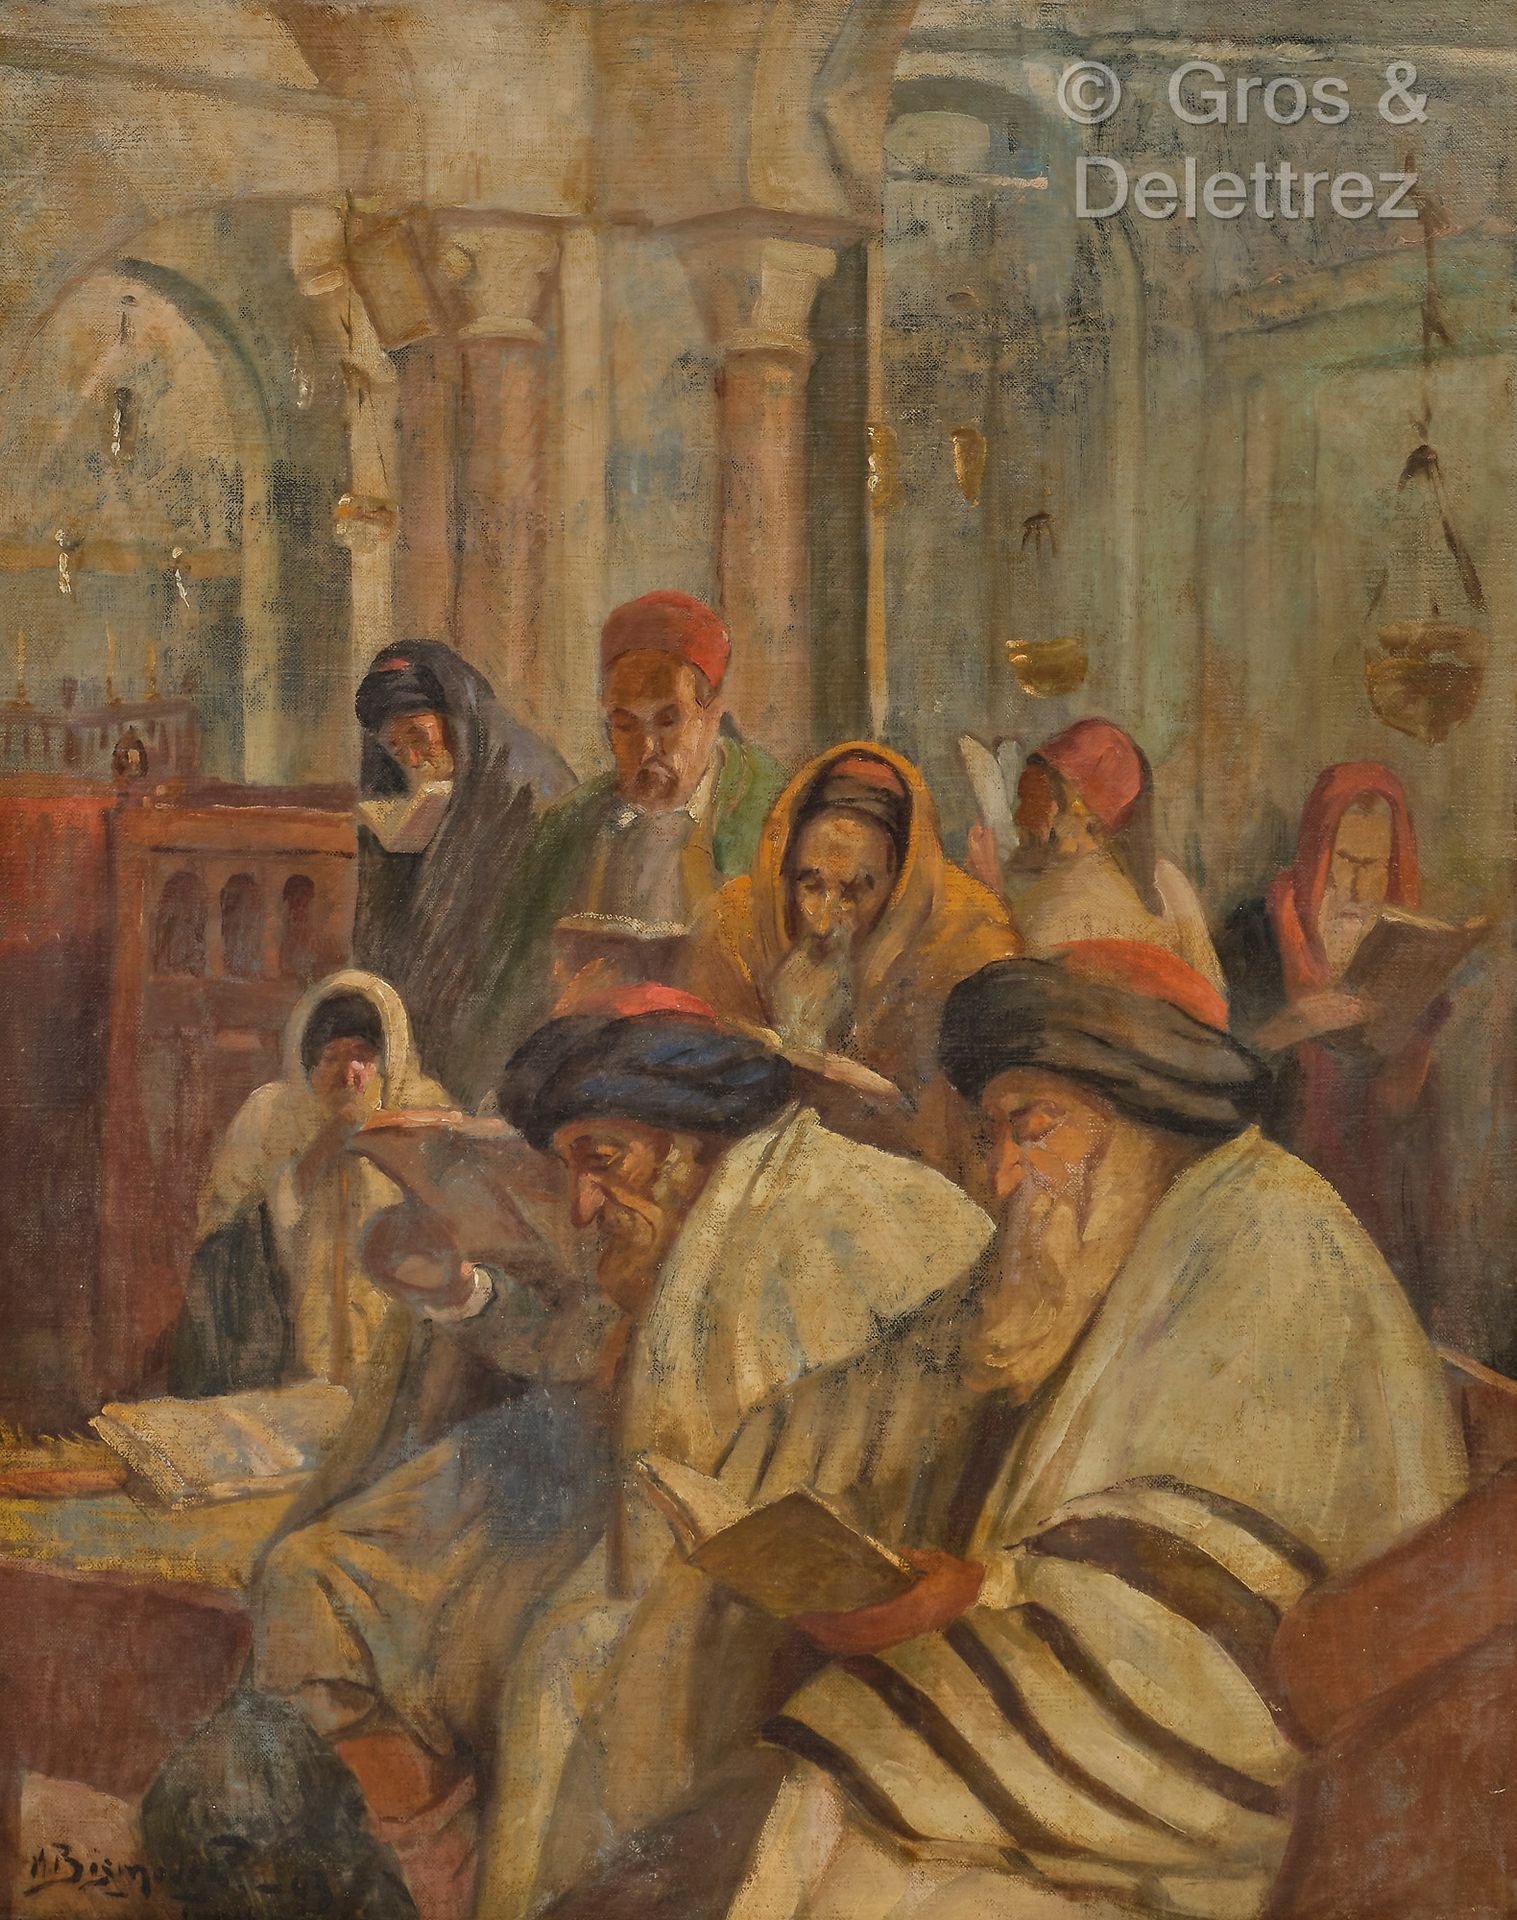 Null 莫里斯-比斯蒙 (1891-1965)
祈祷场景，突尼斯犹太教堂，1943年
布面油画。
左下方有签名、位置和日期
92 x 73 cm